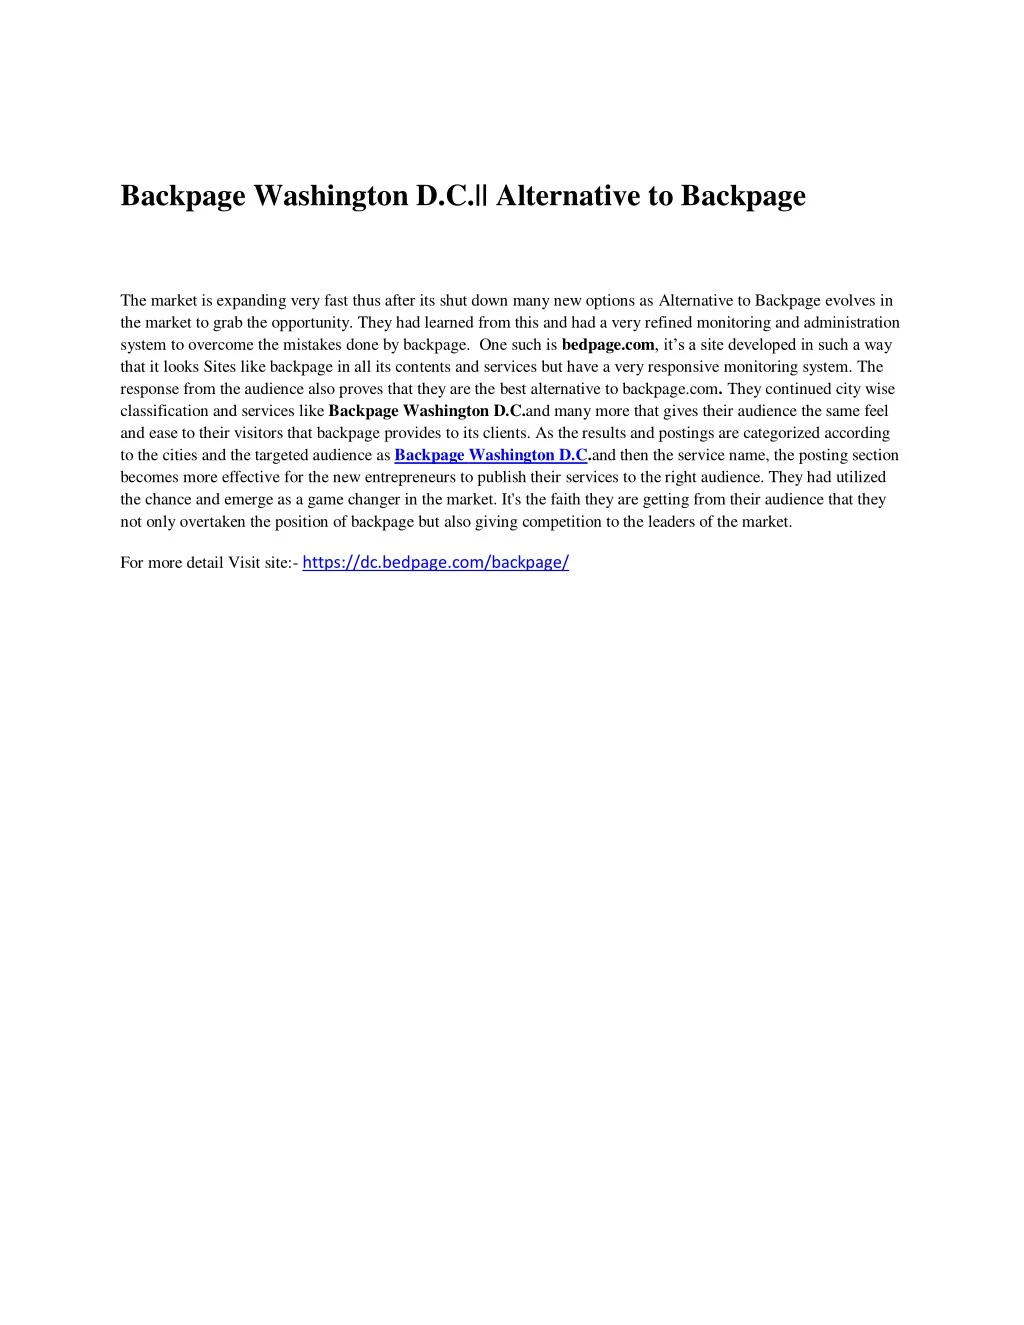 backpage washington d c alternative to backpage